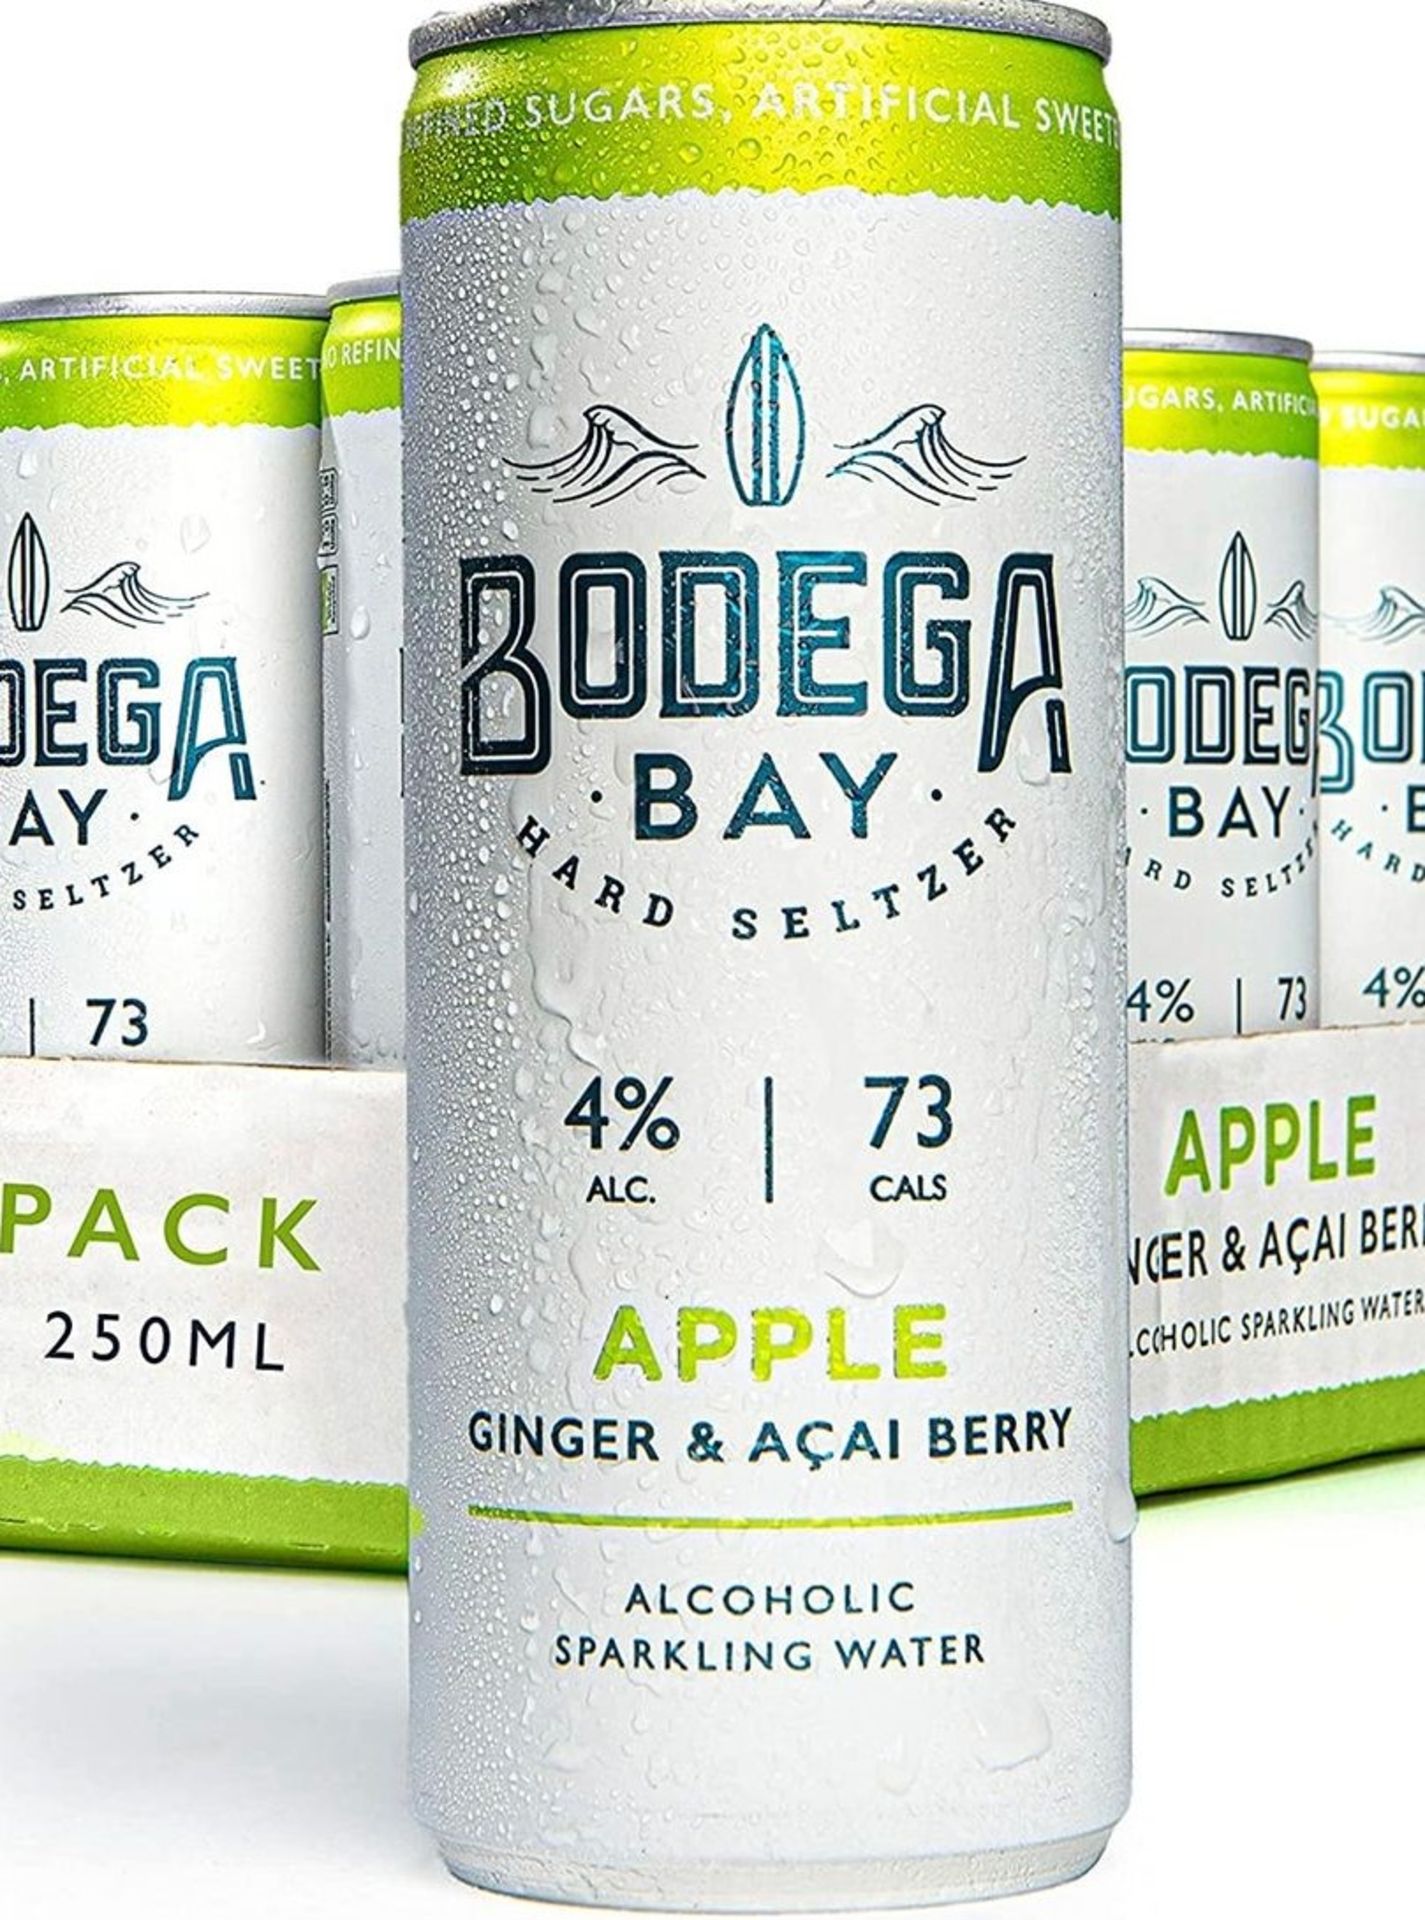 24 x Bodega Bay Hard Seltzer 250ml Alcoholic Sparkling Water Drinks - Apple Ginger & Acai Berry - 4% - Image 5 of 7